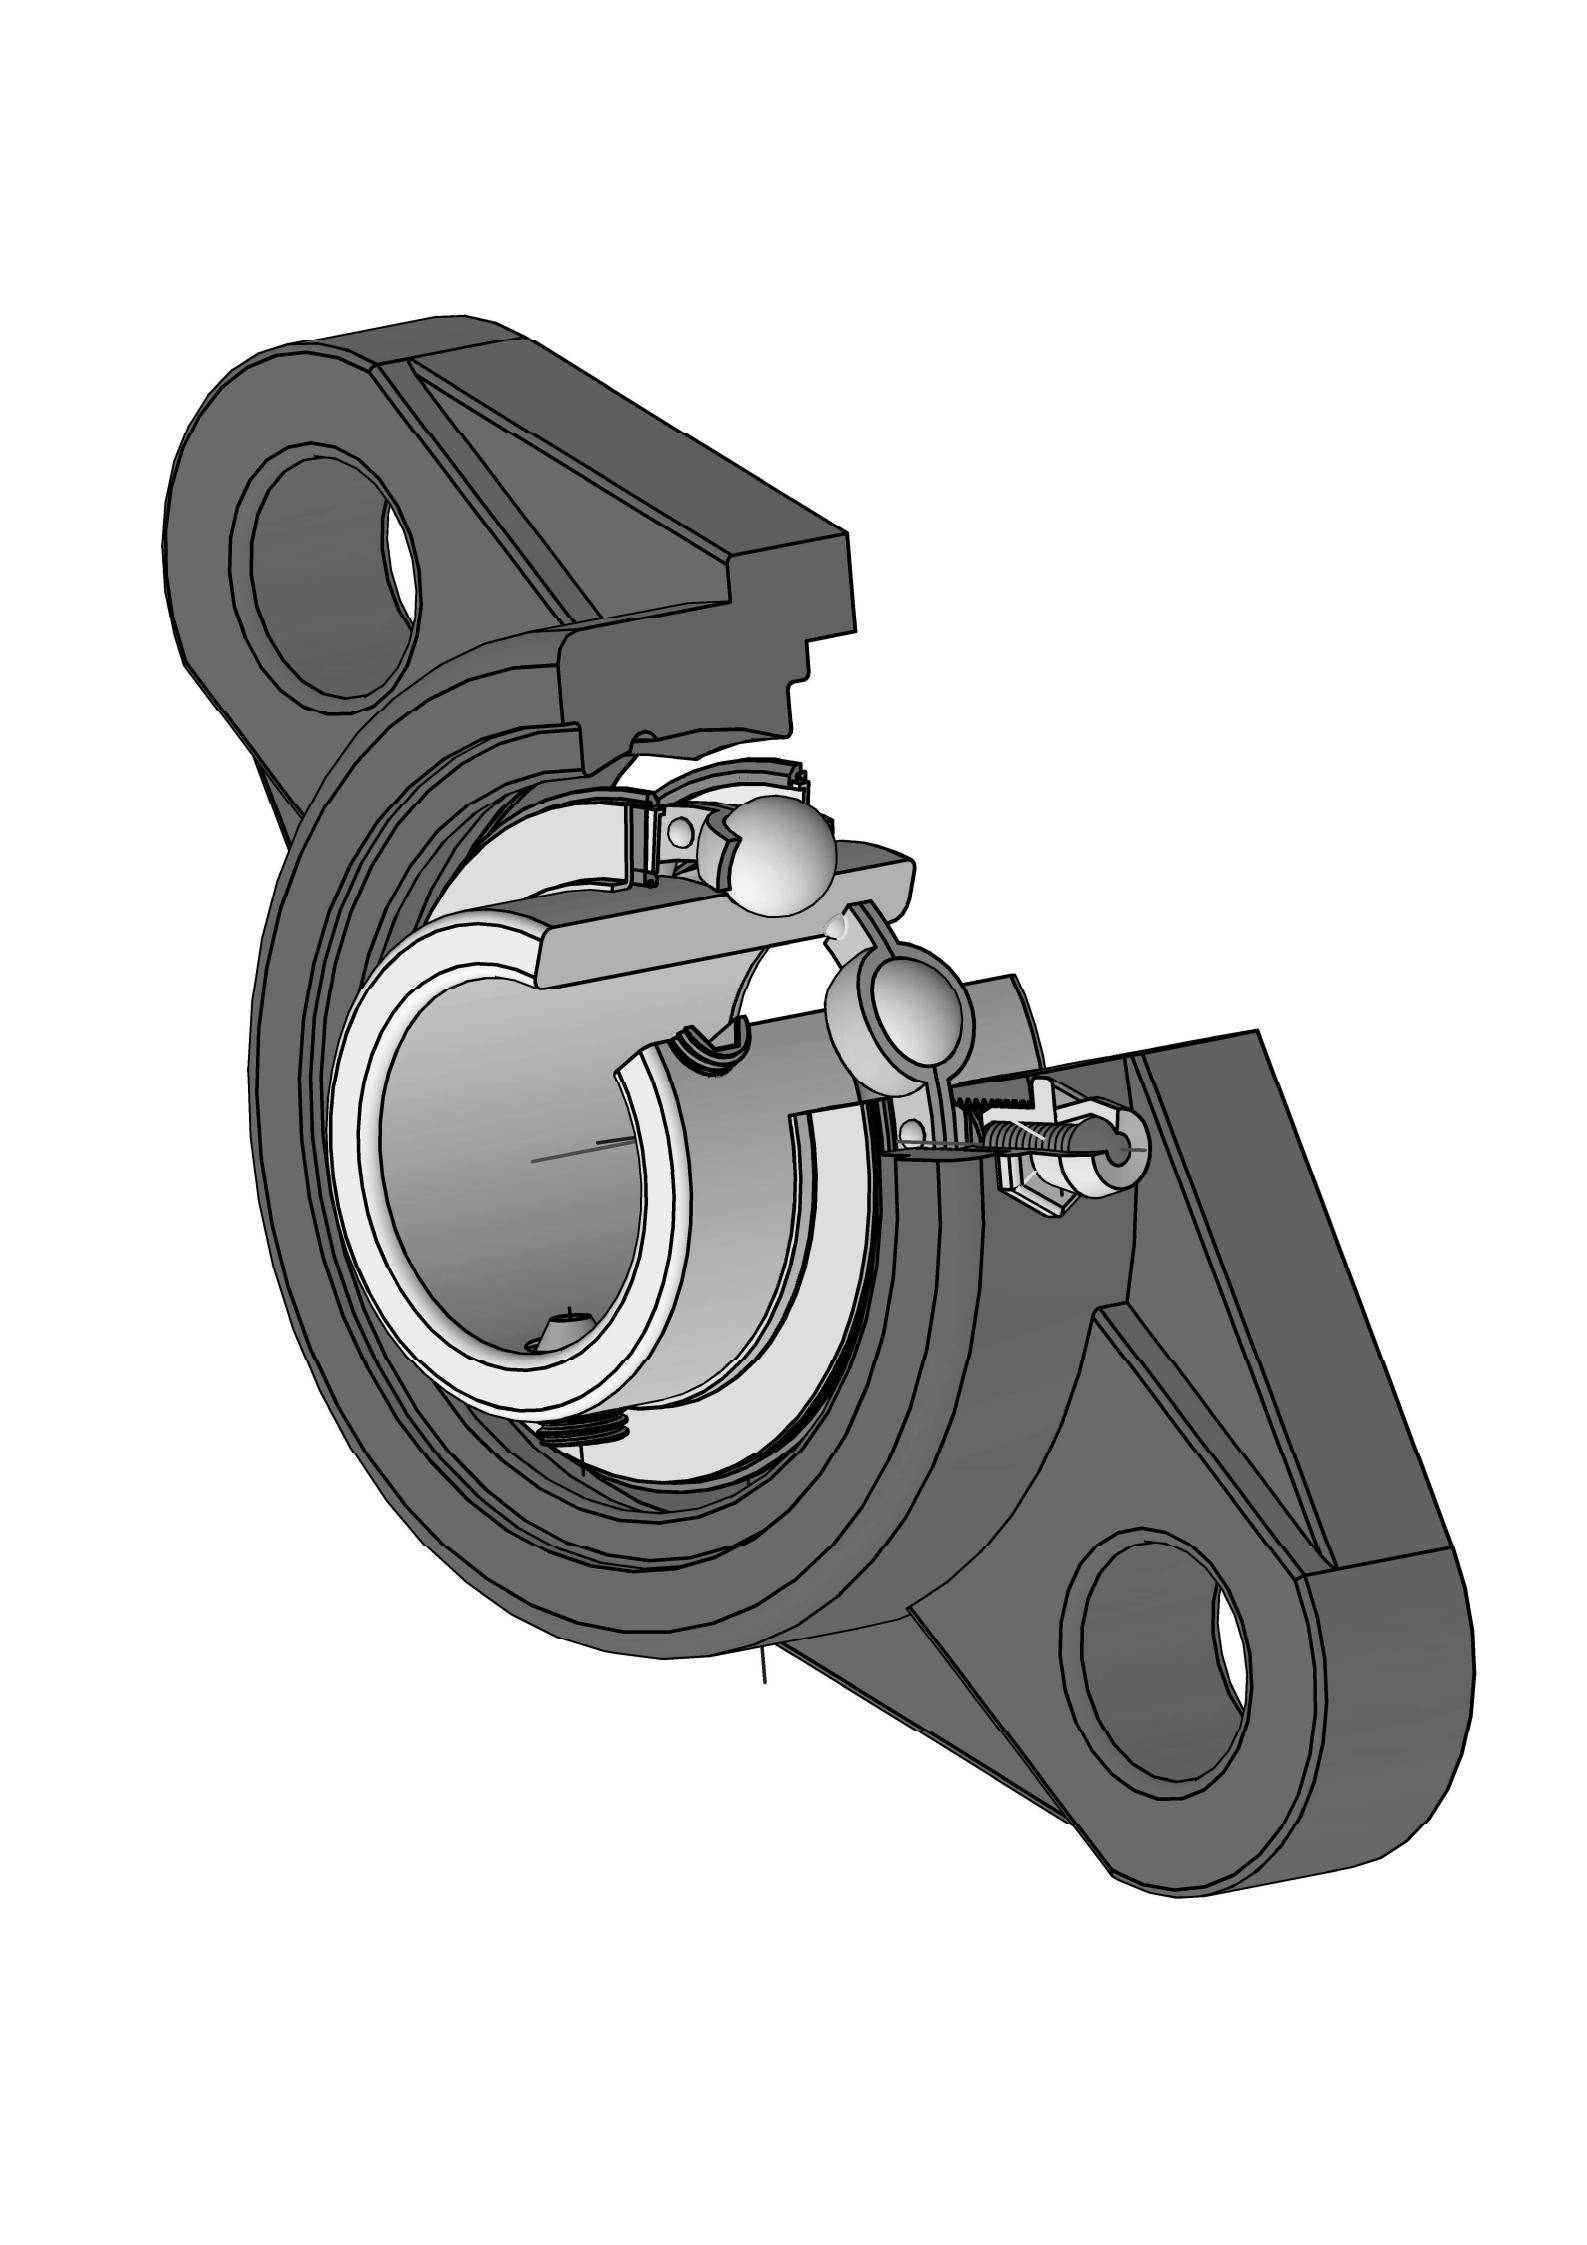 UCFT208-24 1-1/2 လက်မ bore ပါသော Bolt Oval Flange bearing ယူနစ်များ